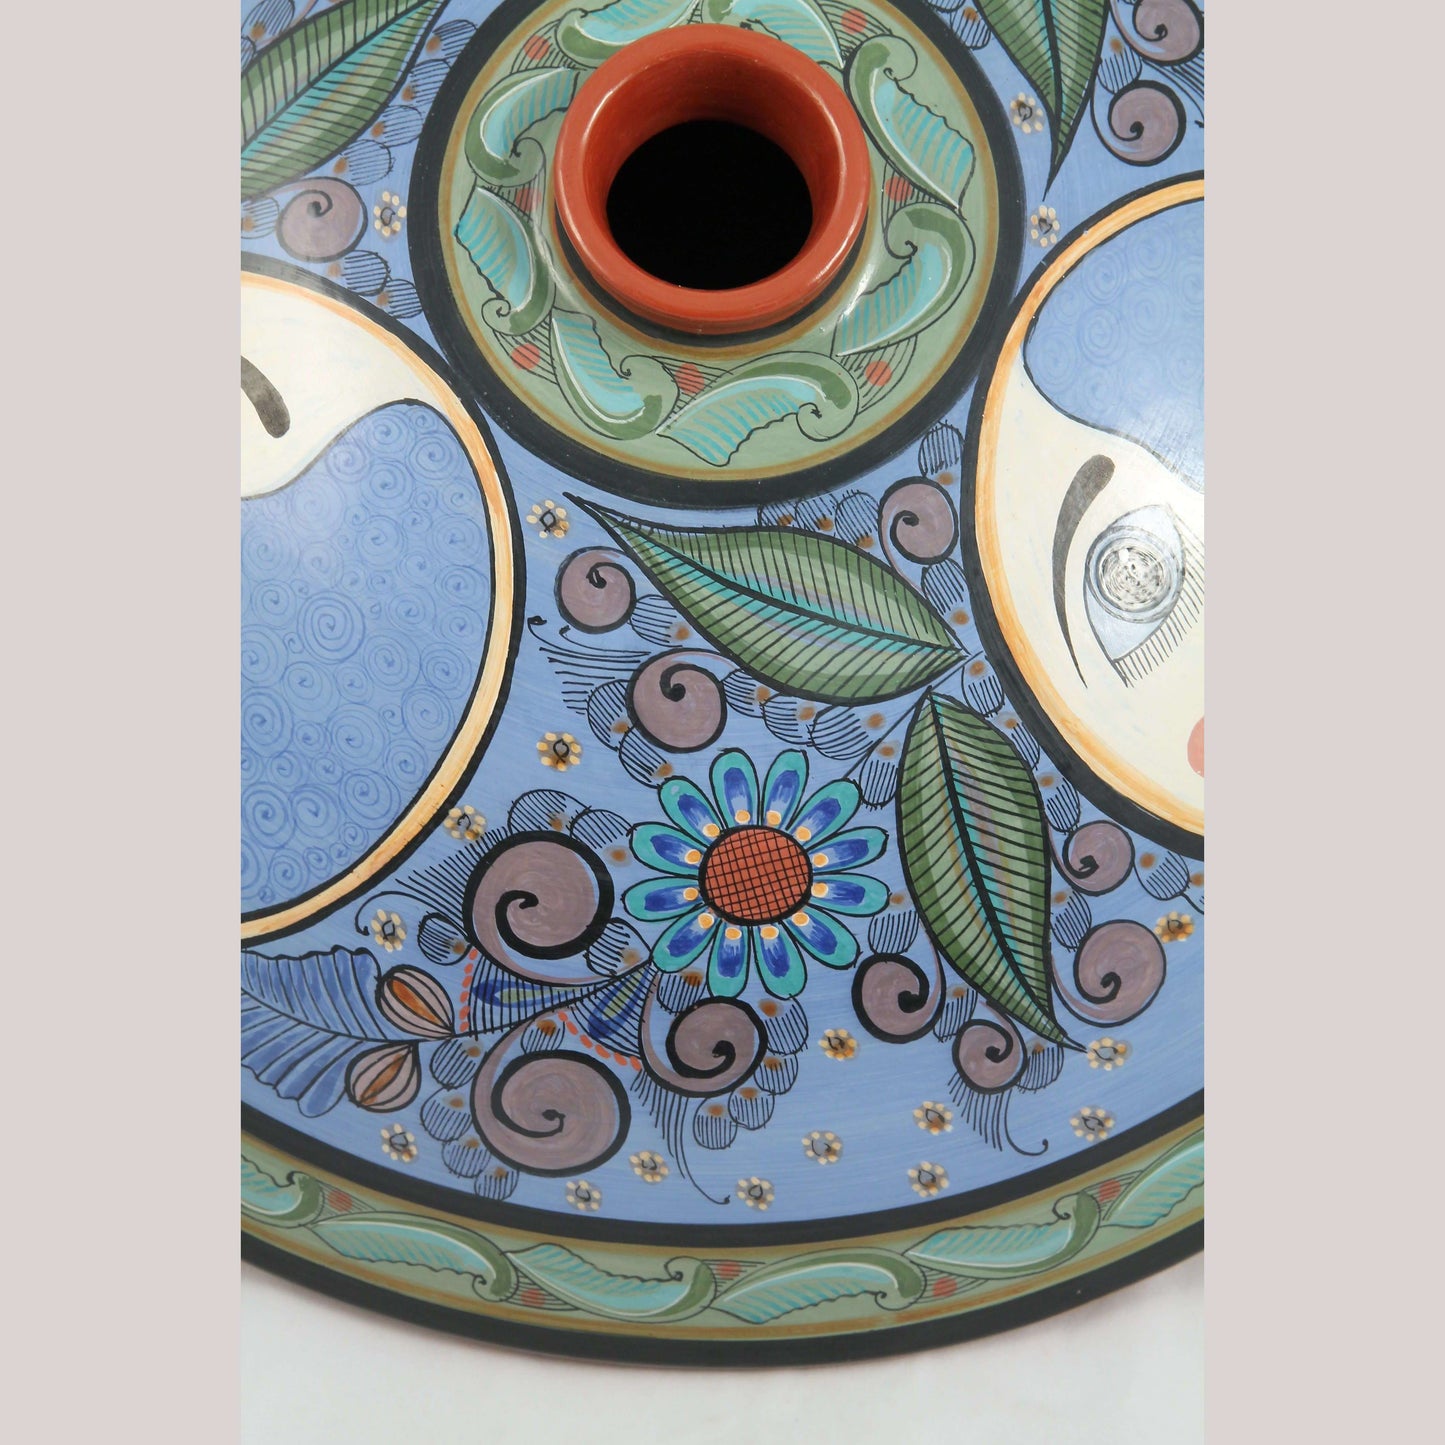 Huge 3 Footed Ceramic Vessel Mexico Fine Folk Art Master Jose Luis Cortez 3 Moon